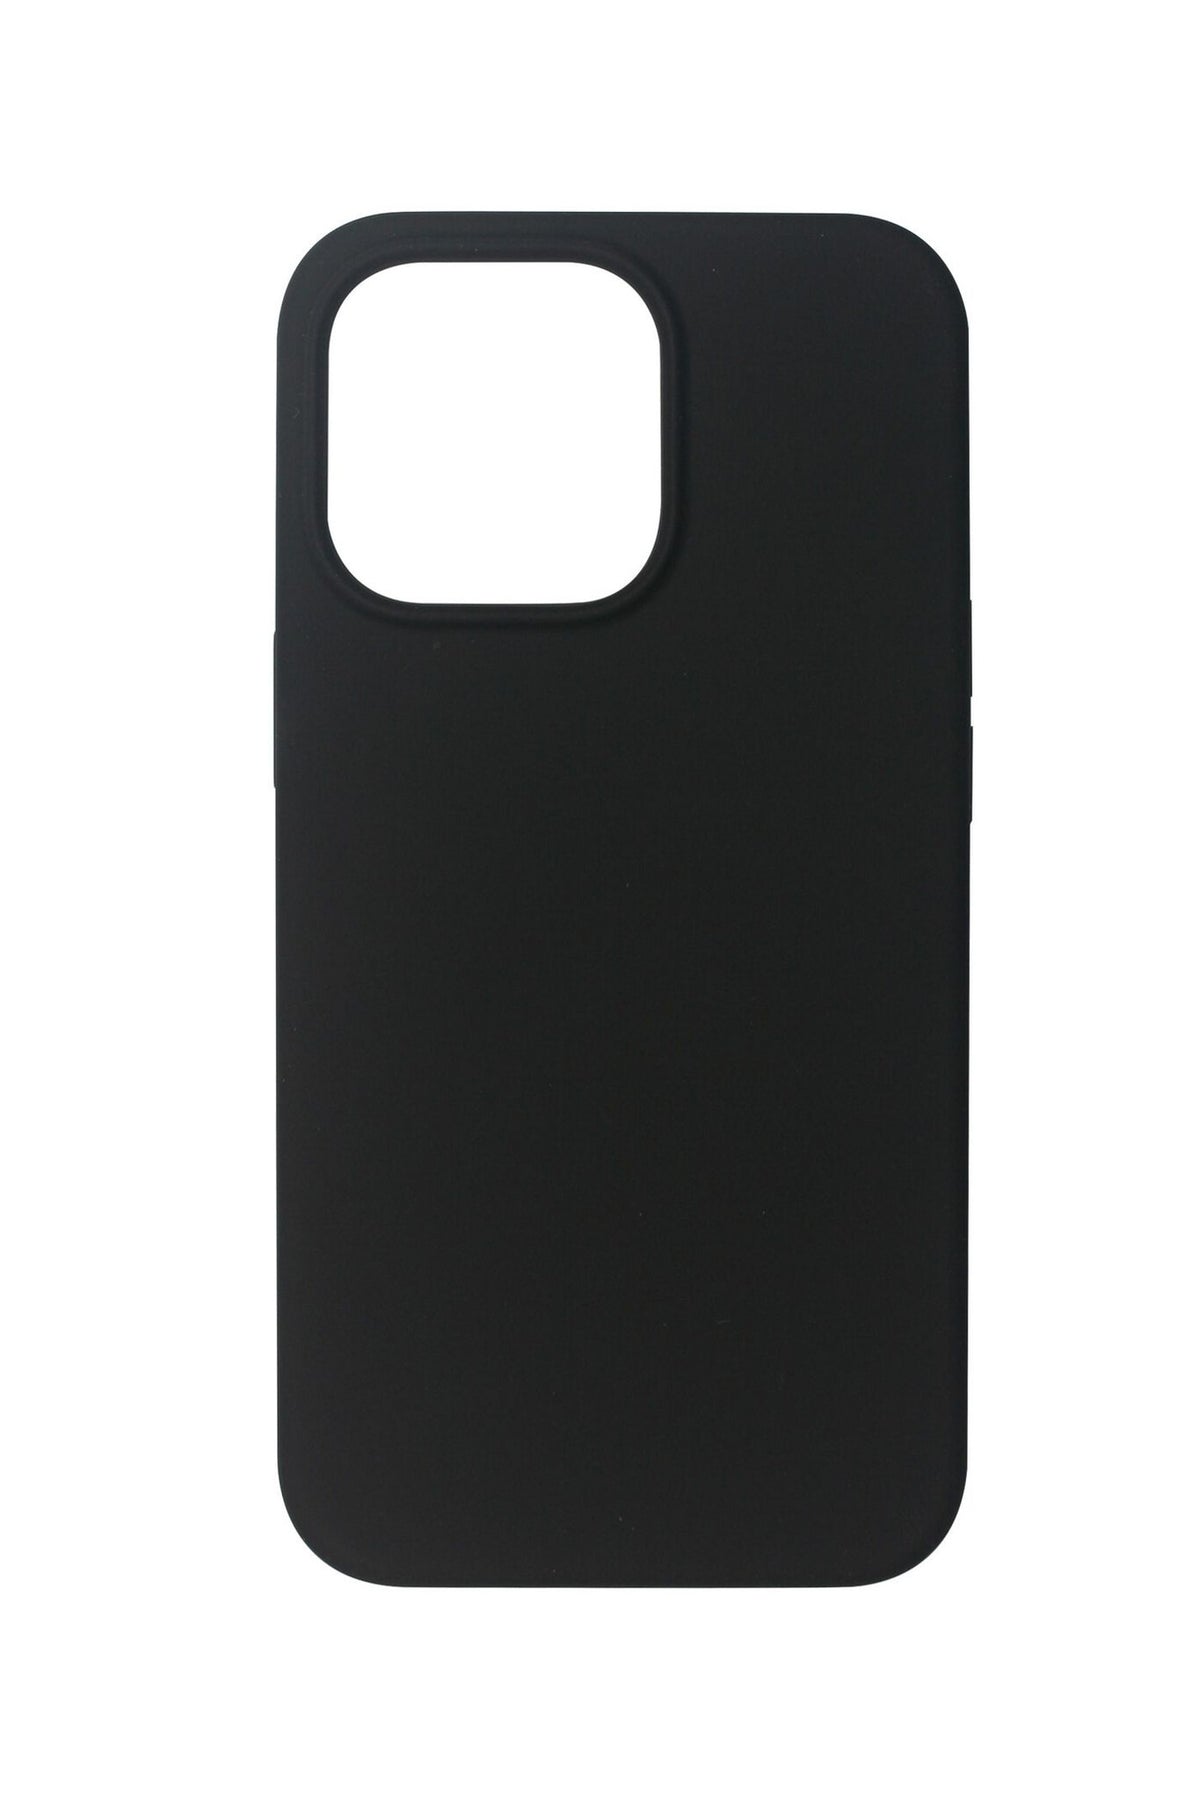 eSTUFF DUBLIN Magnetic mobile phone case for iPhone 13 Pro Max in Black